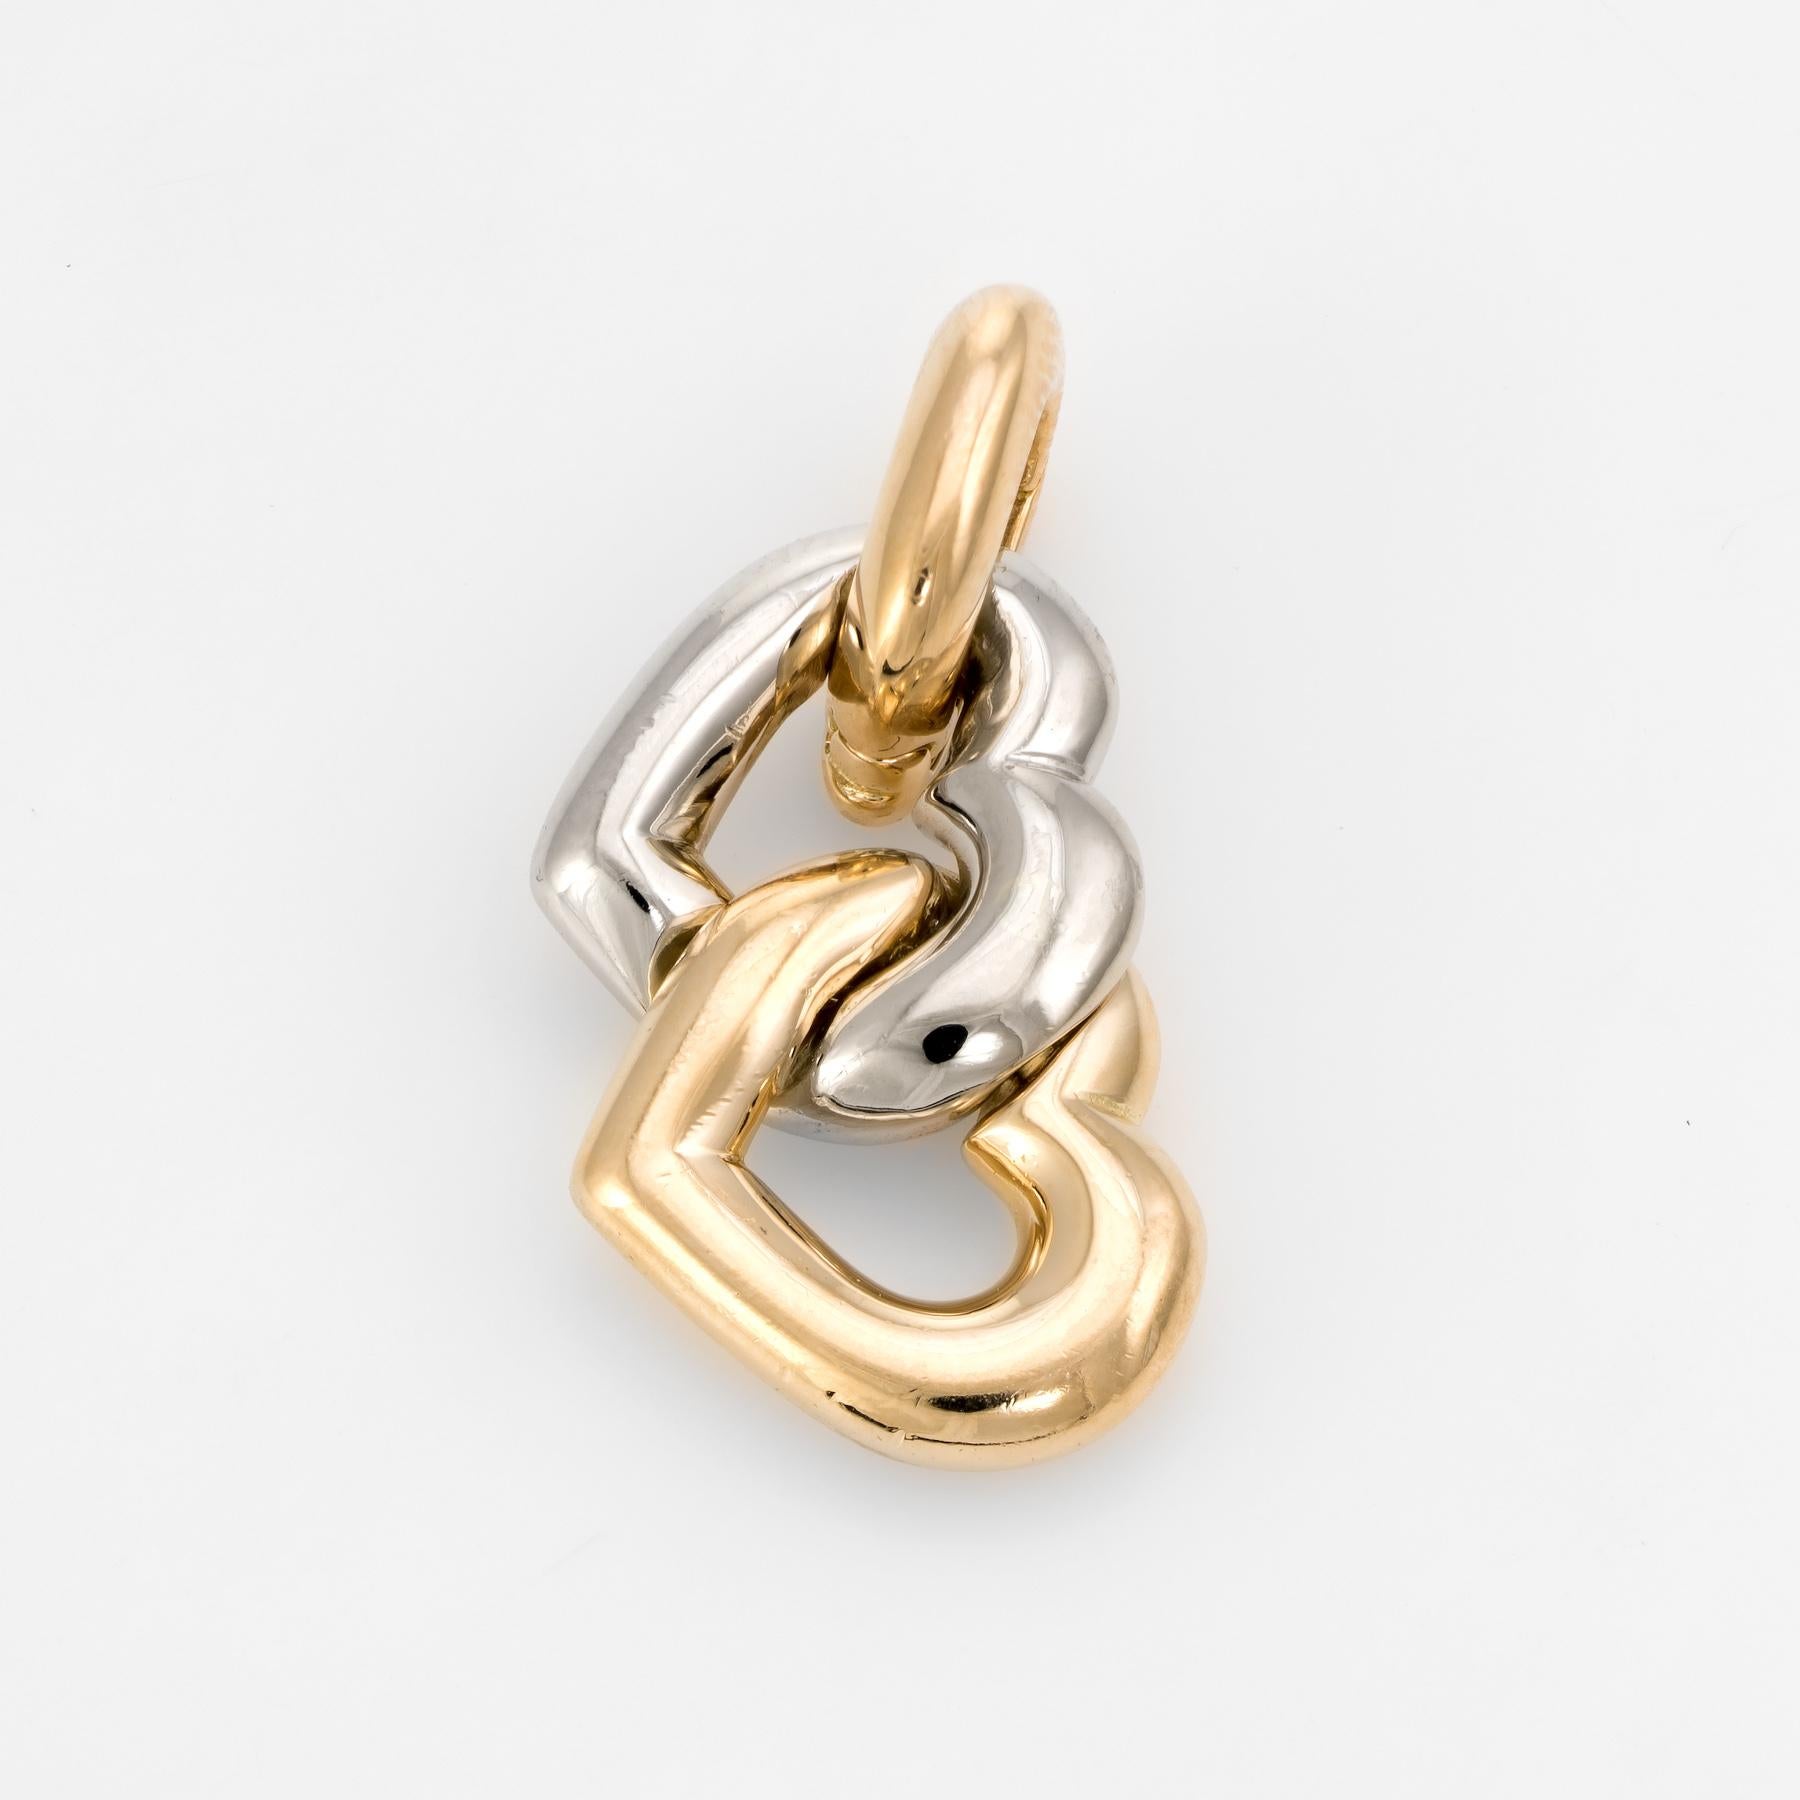 Cartier Double Heart Charm Pendant Vintage 18 Karat Gold Signed Jewelry (Moderne)